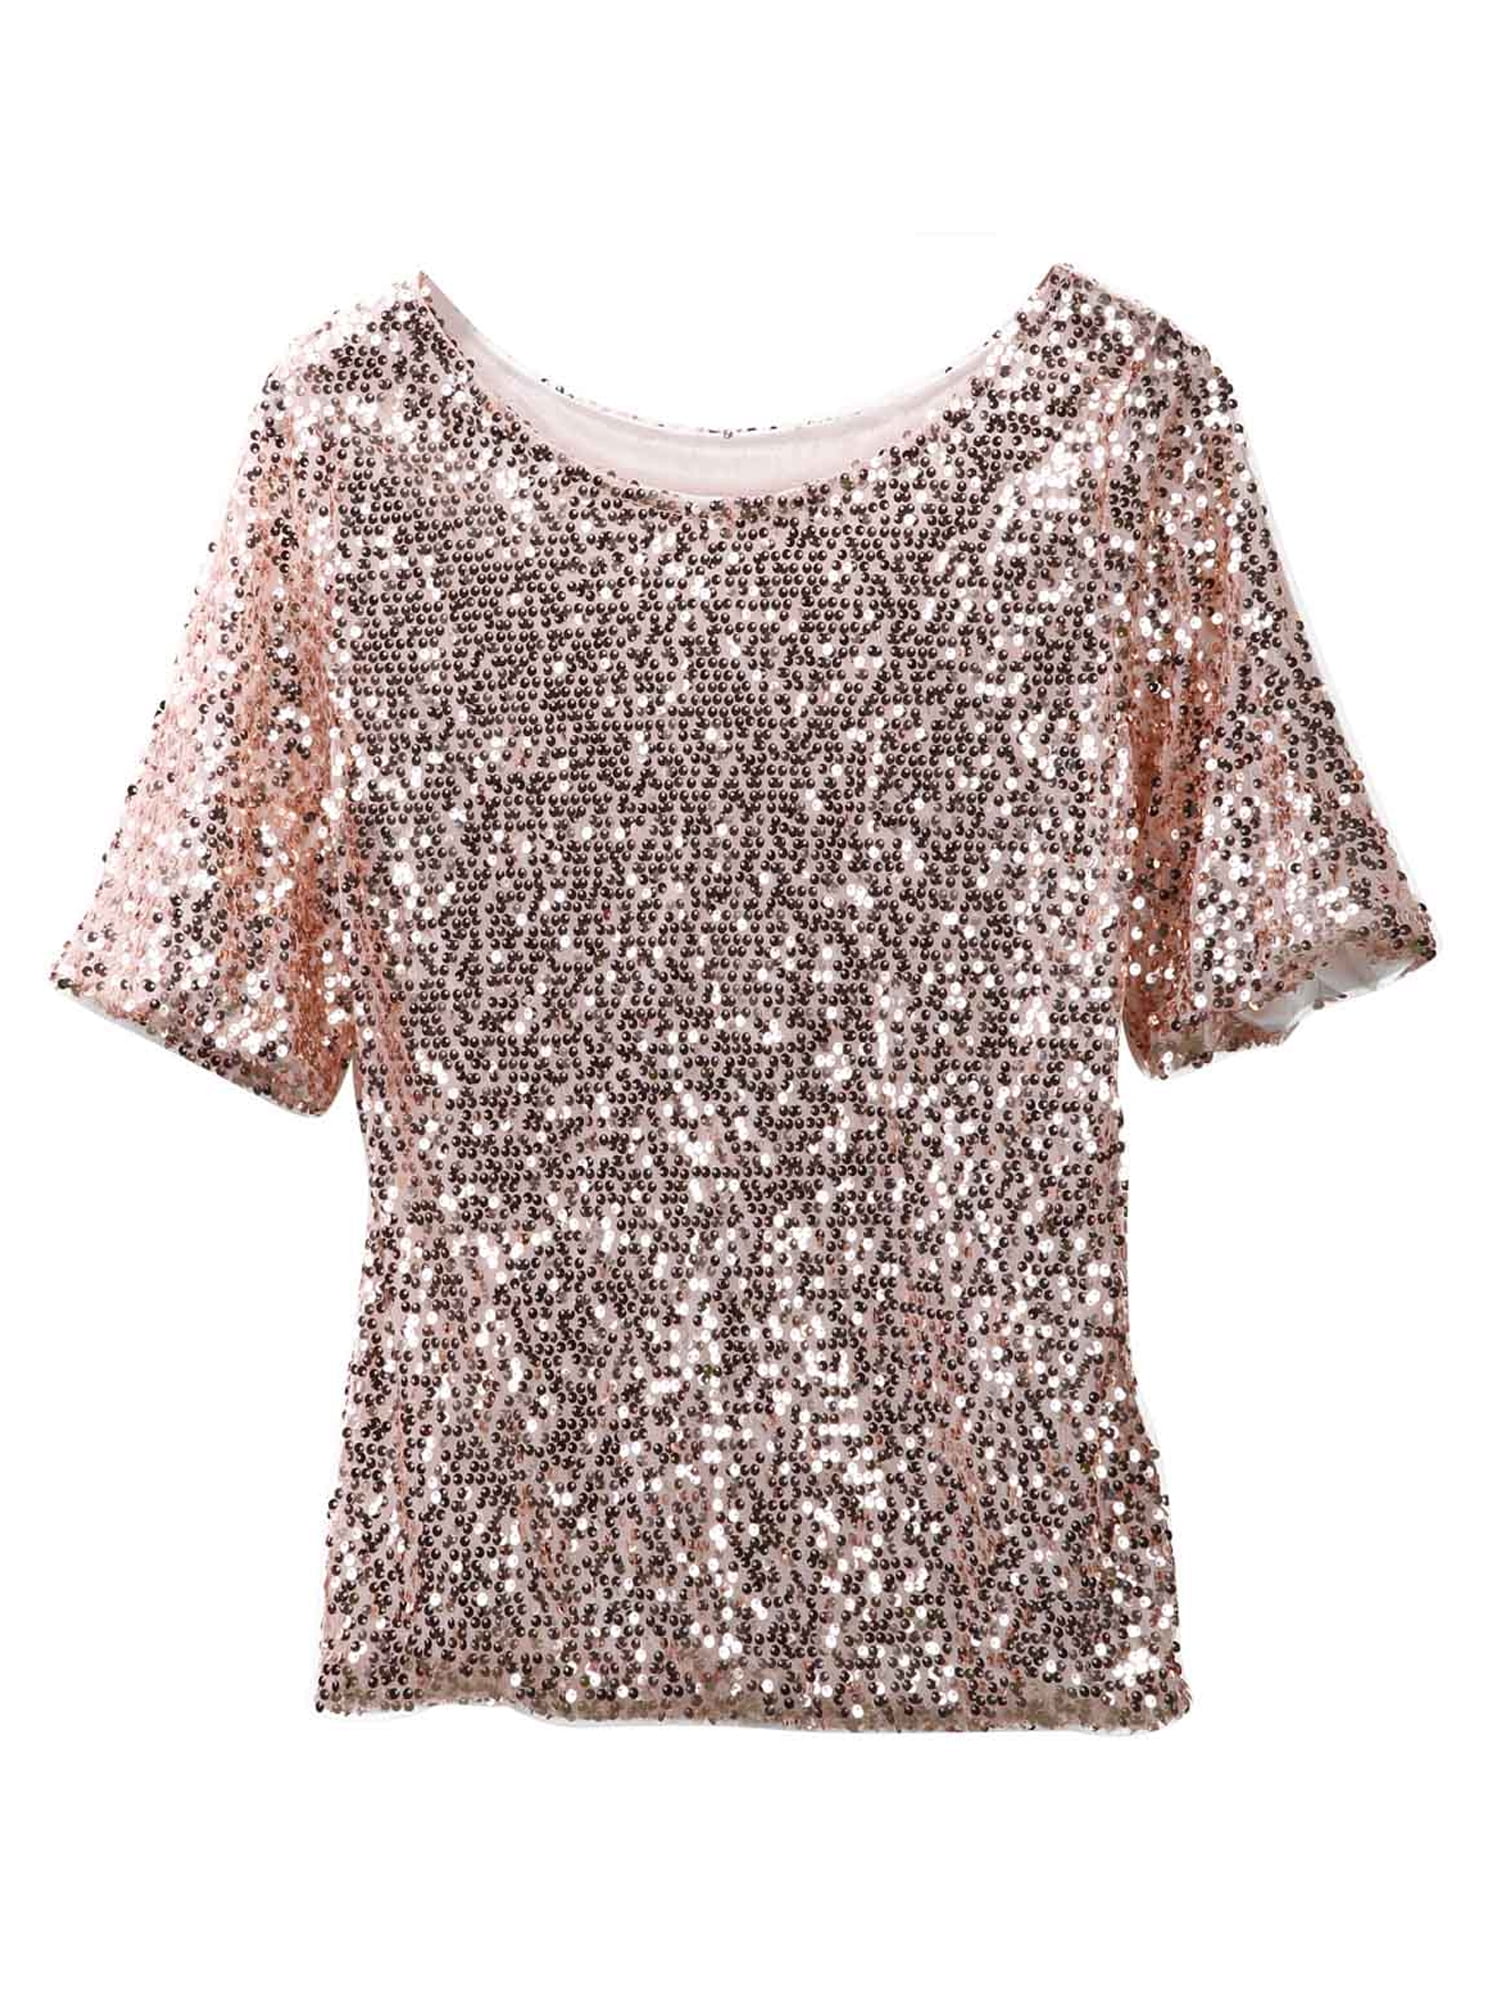 New women top short sleeves t shirt style glitter details with belt 8 10 12 14